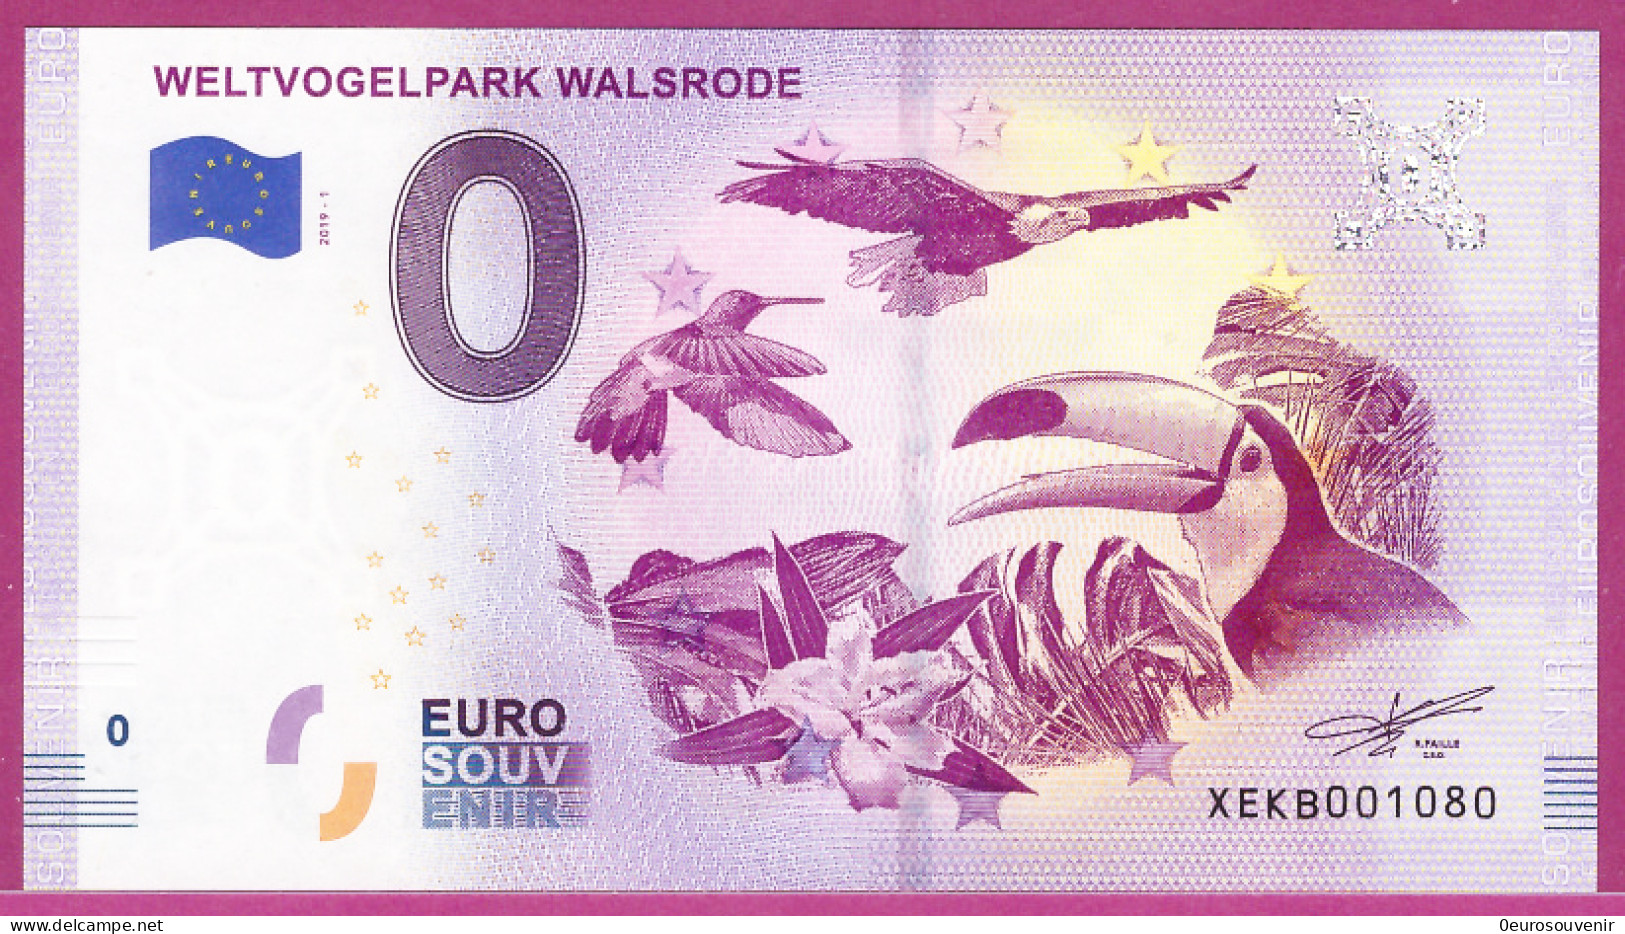 0-Euro XEKB 2019-1 WELTVOGELPARK WALSRODE - Private Proofs / Unofficial